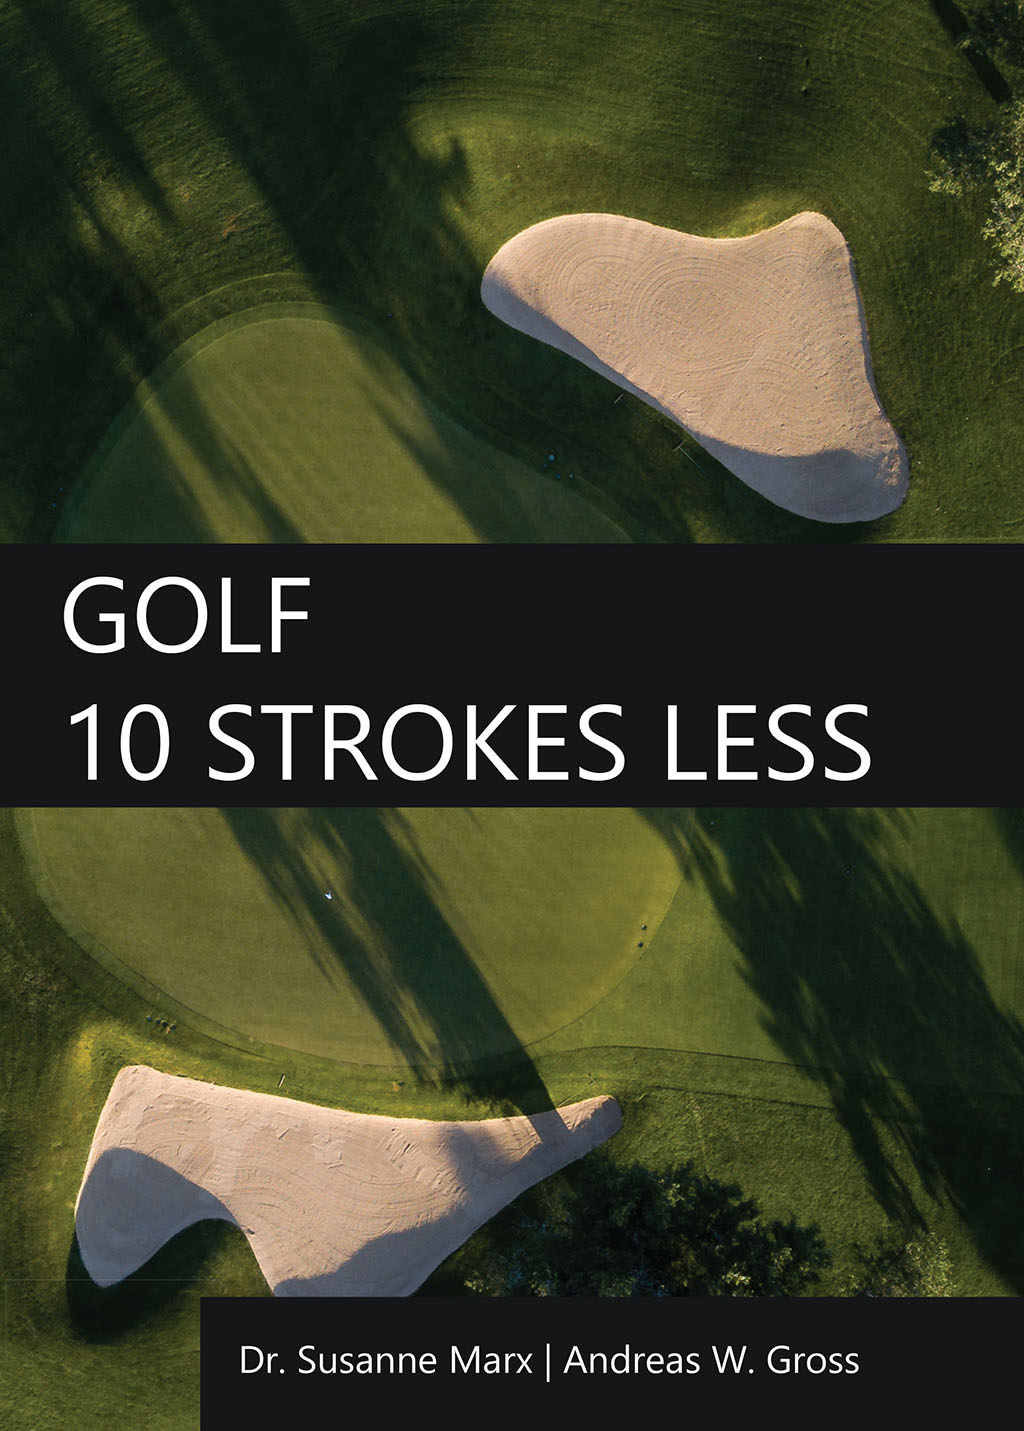 Golf - 10 Strokes Less